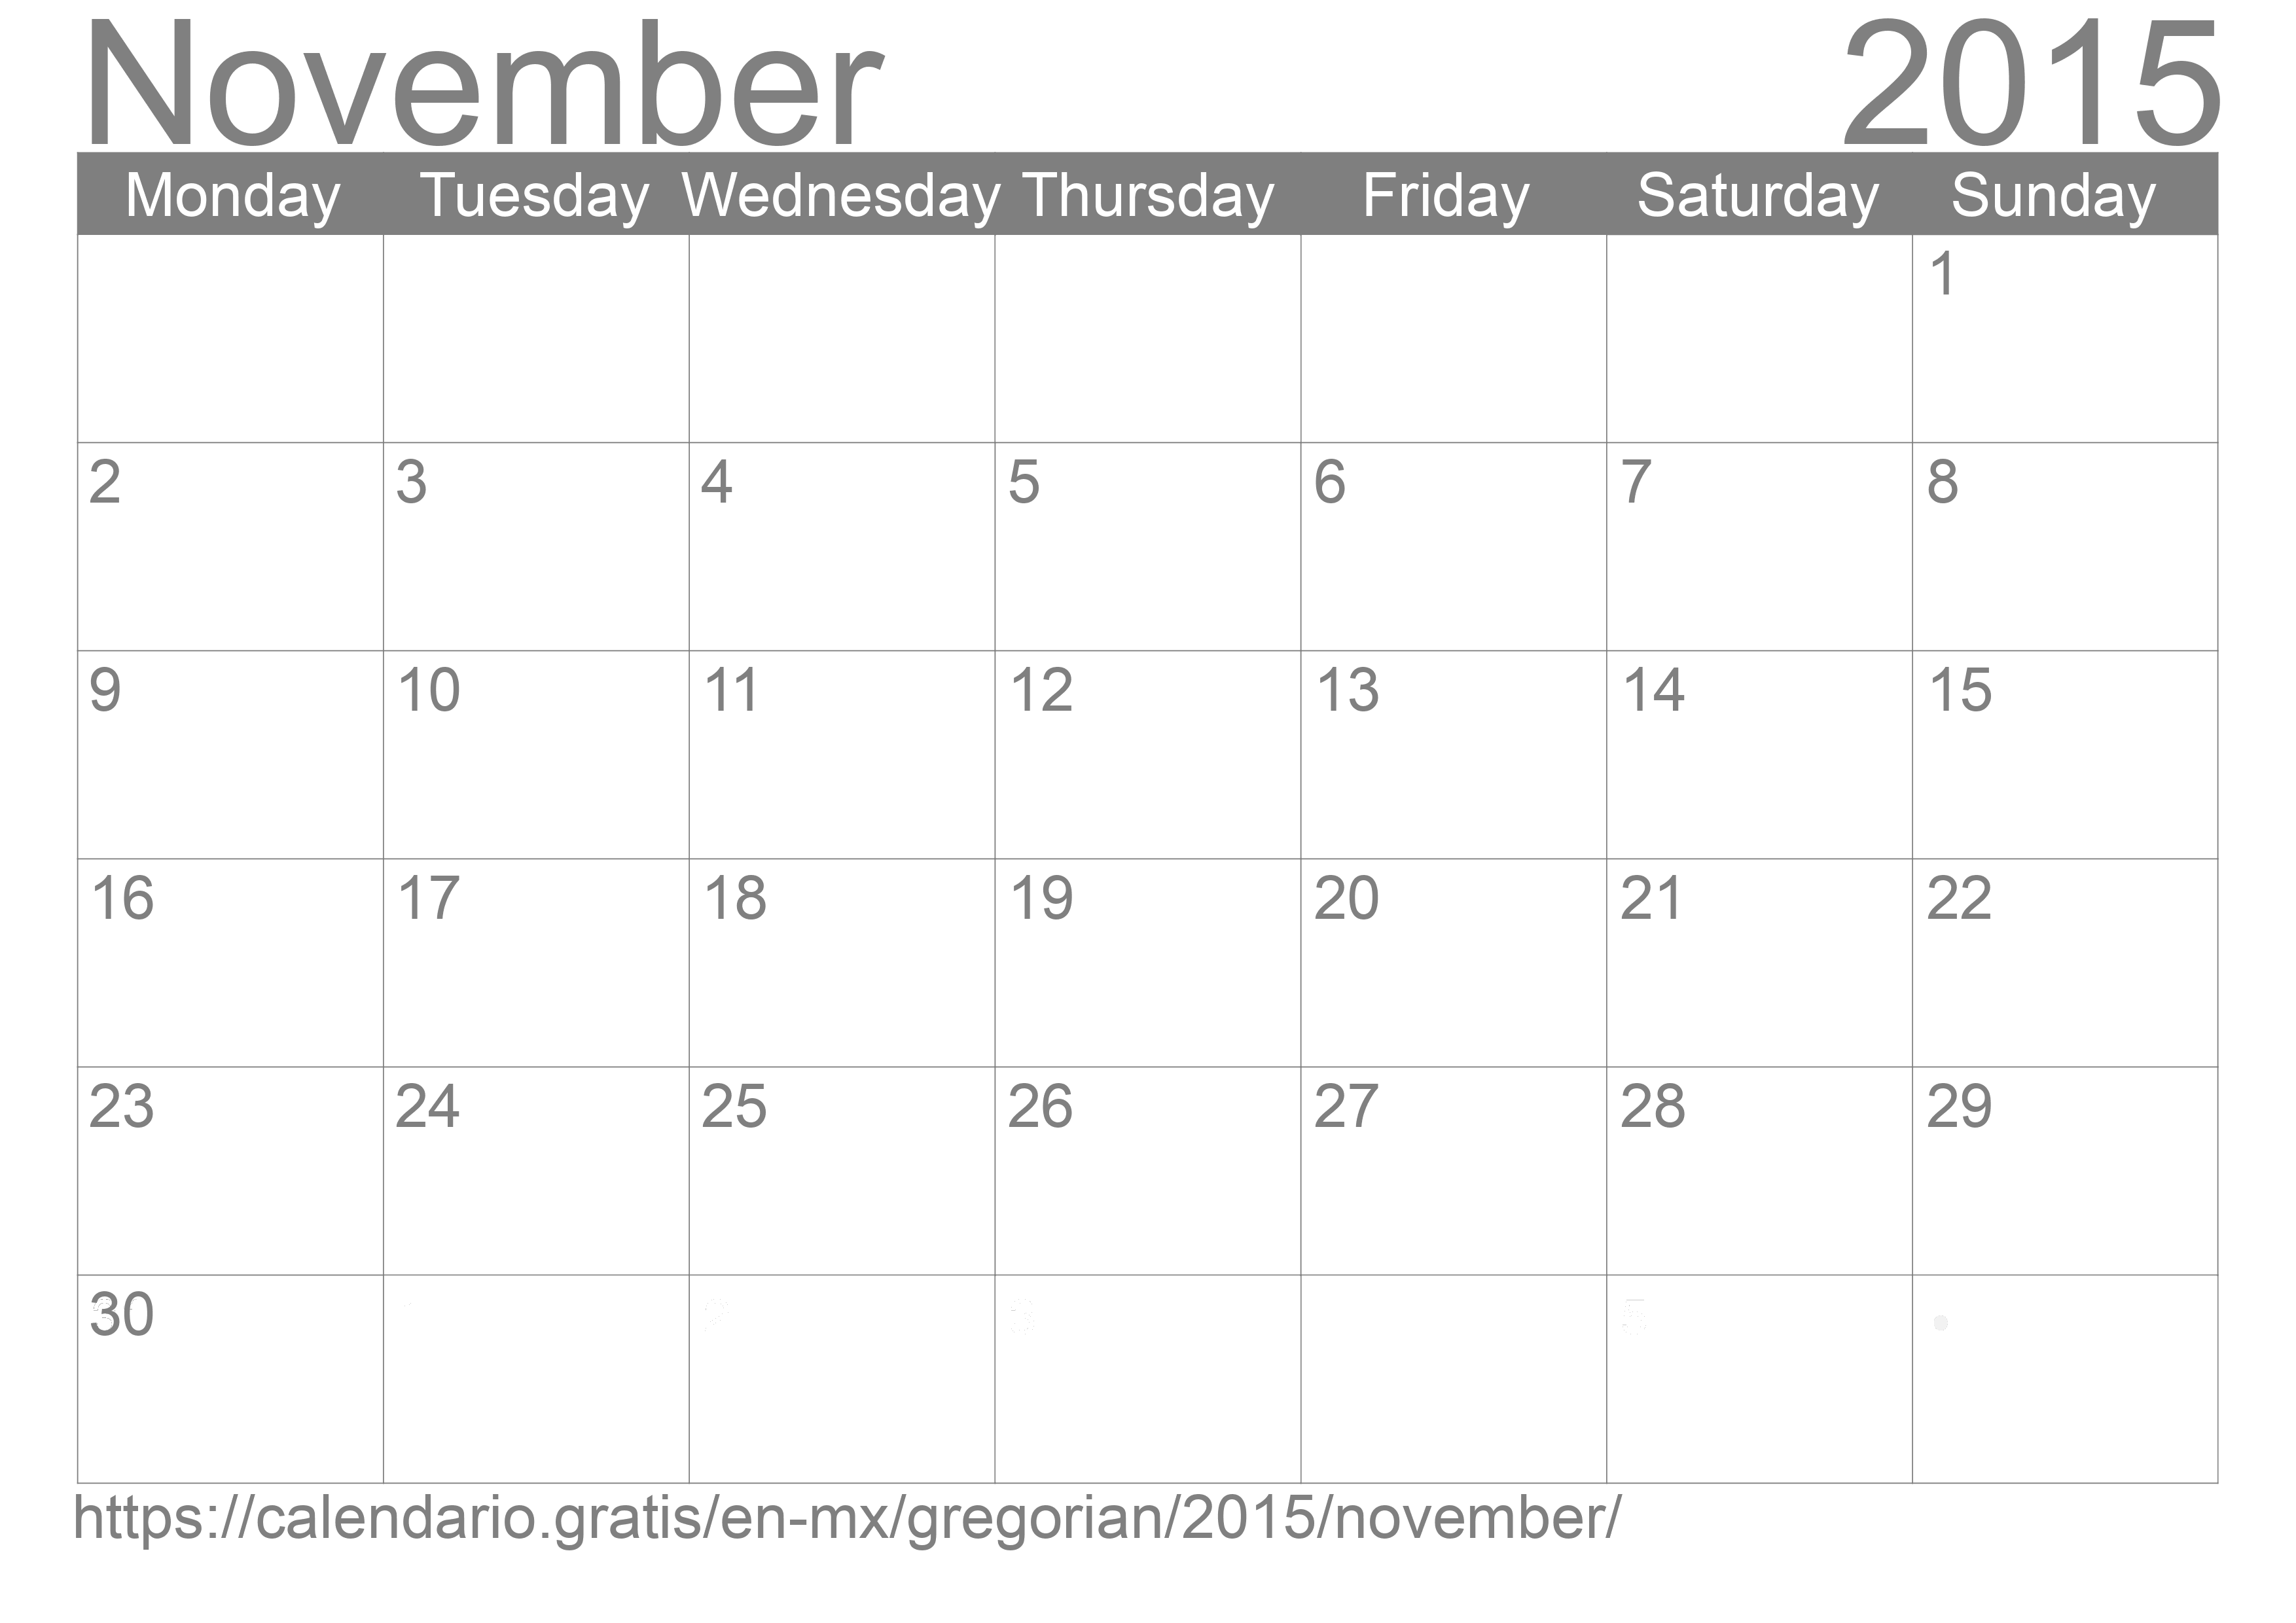 Calendar November 2015 to print